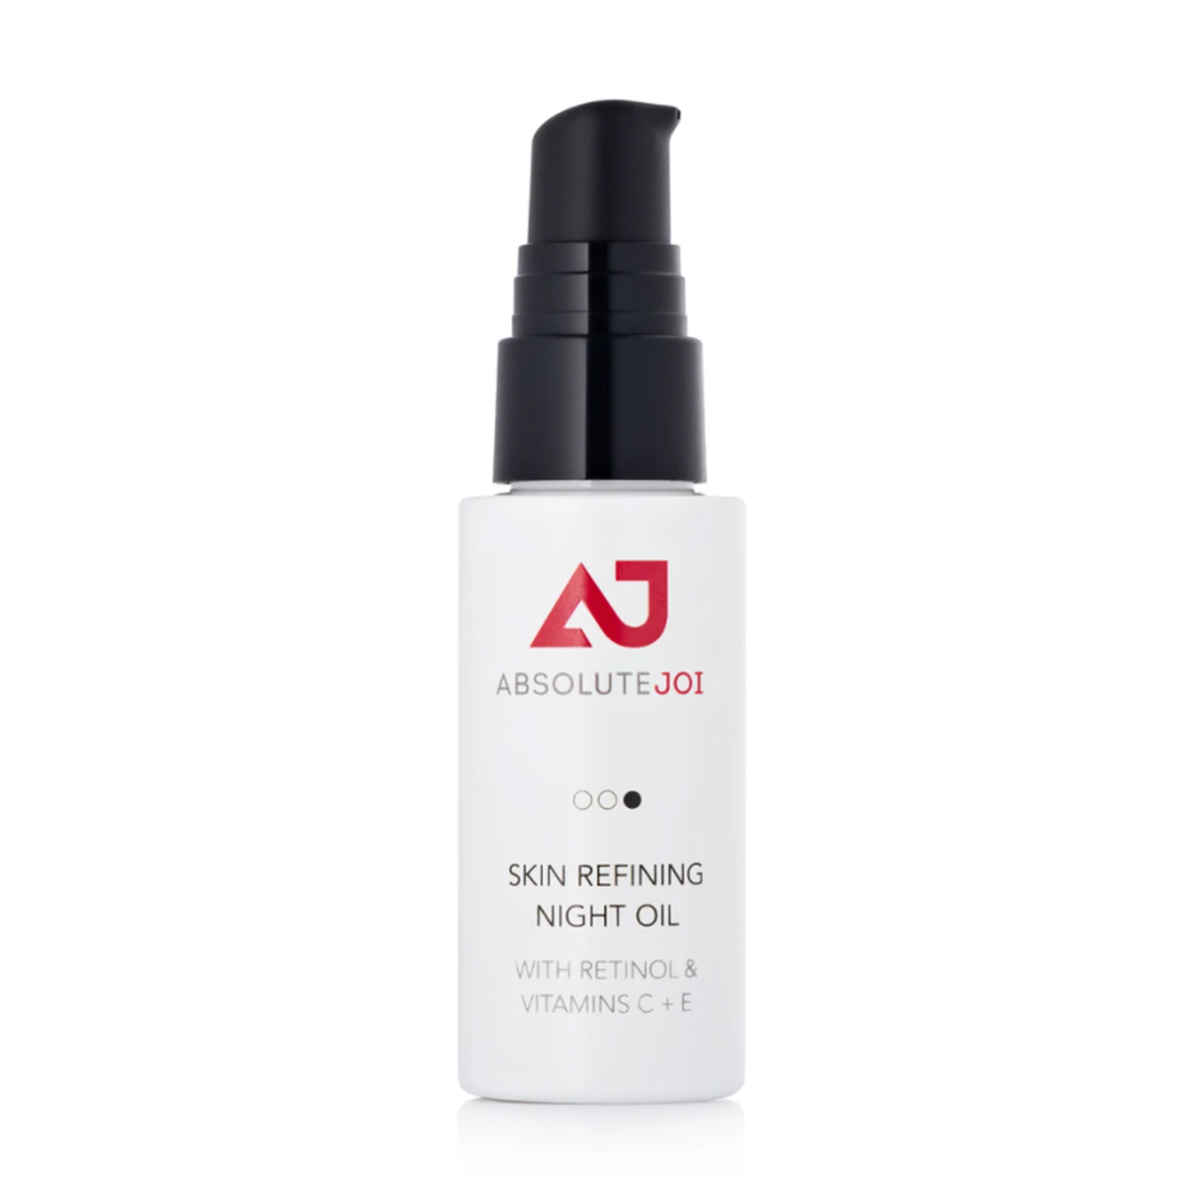 AbsoluteJoi Skin Refining Night Oil With Retinol and Vitamins C+E